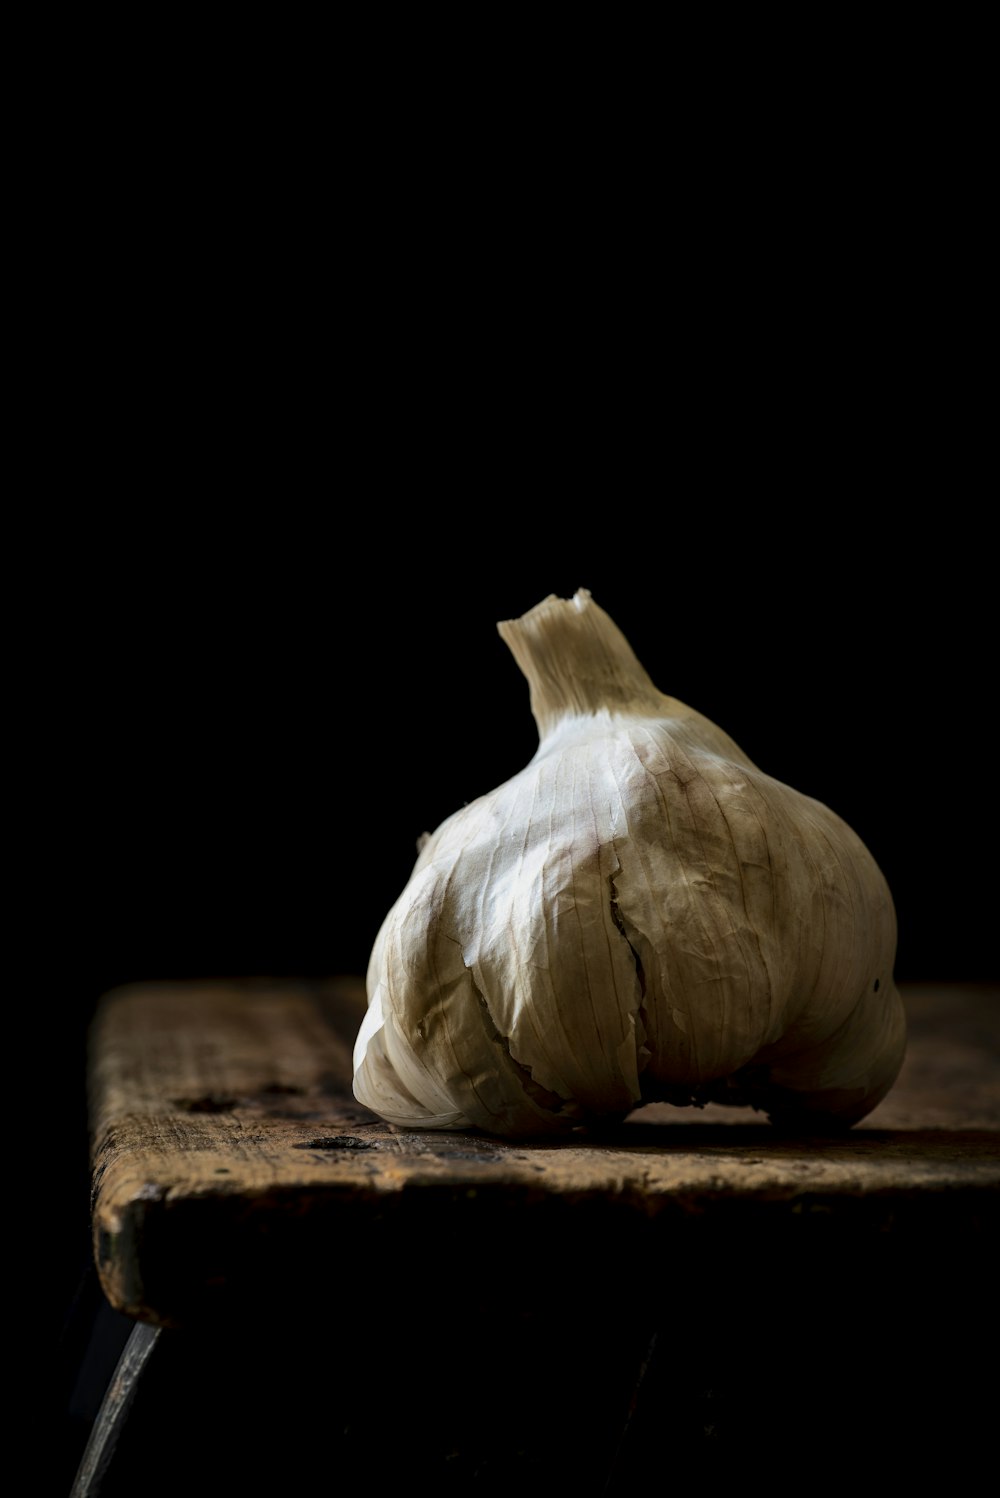 a garlic on a table